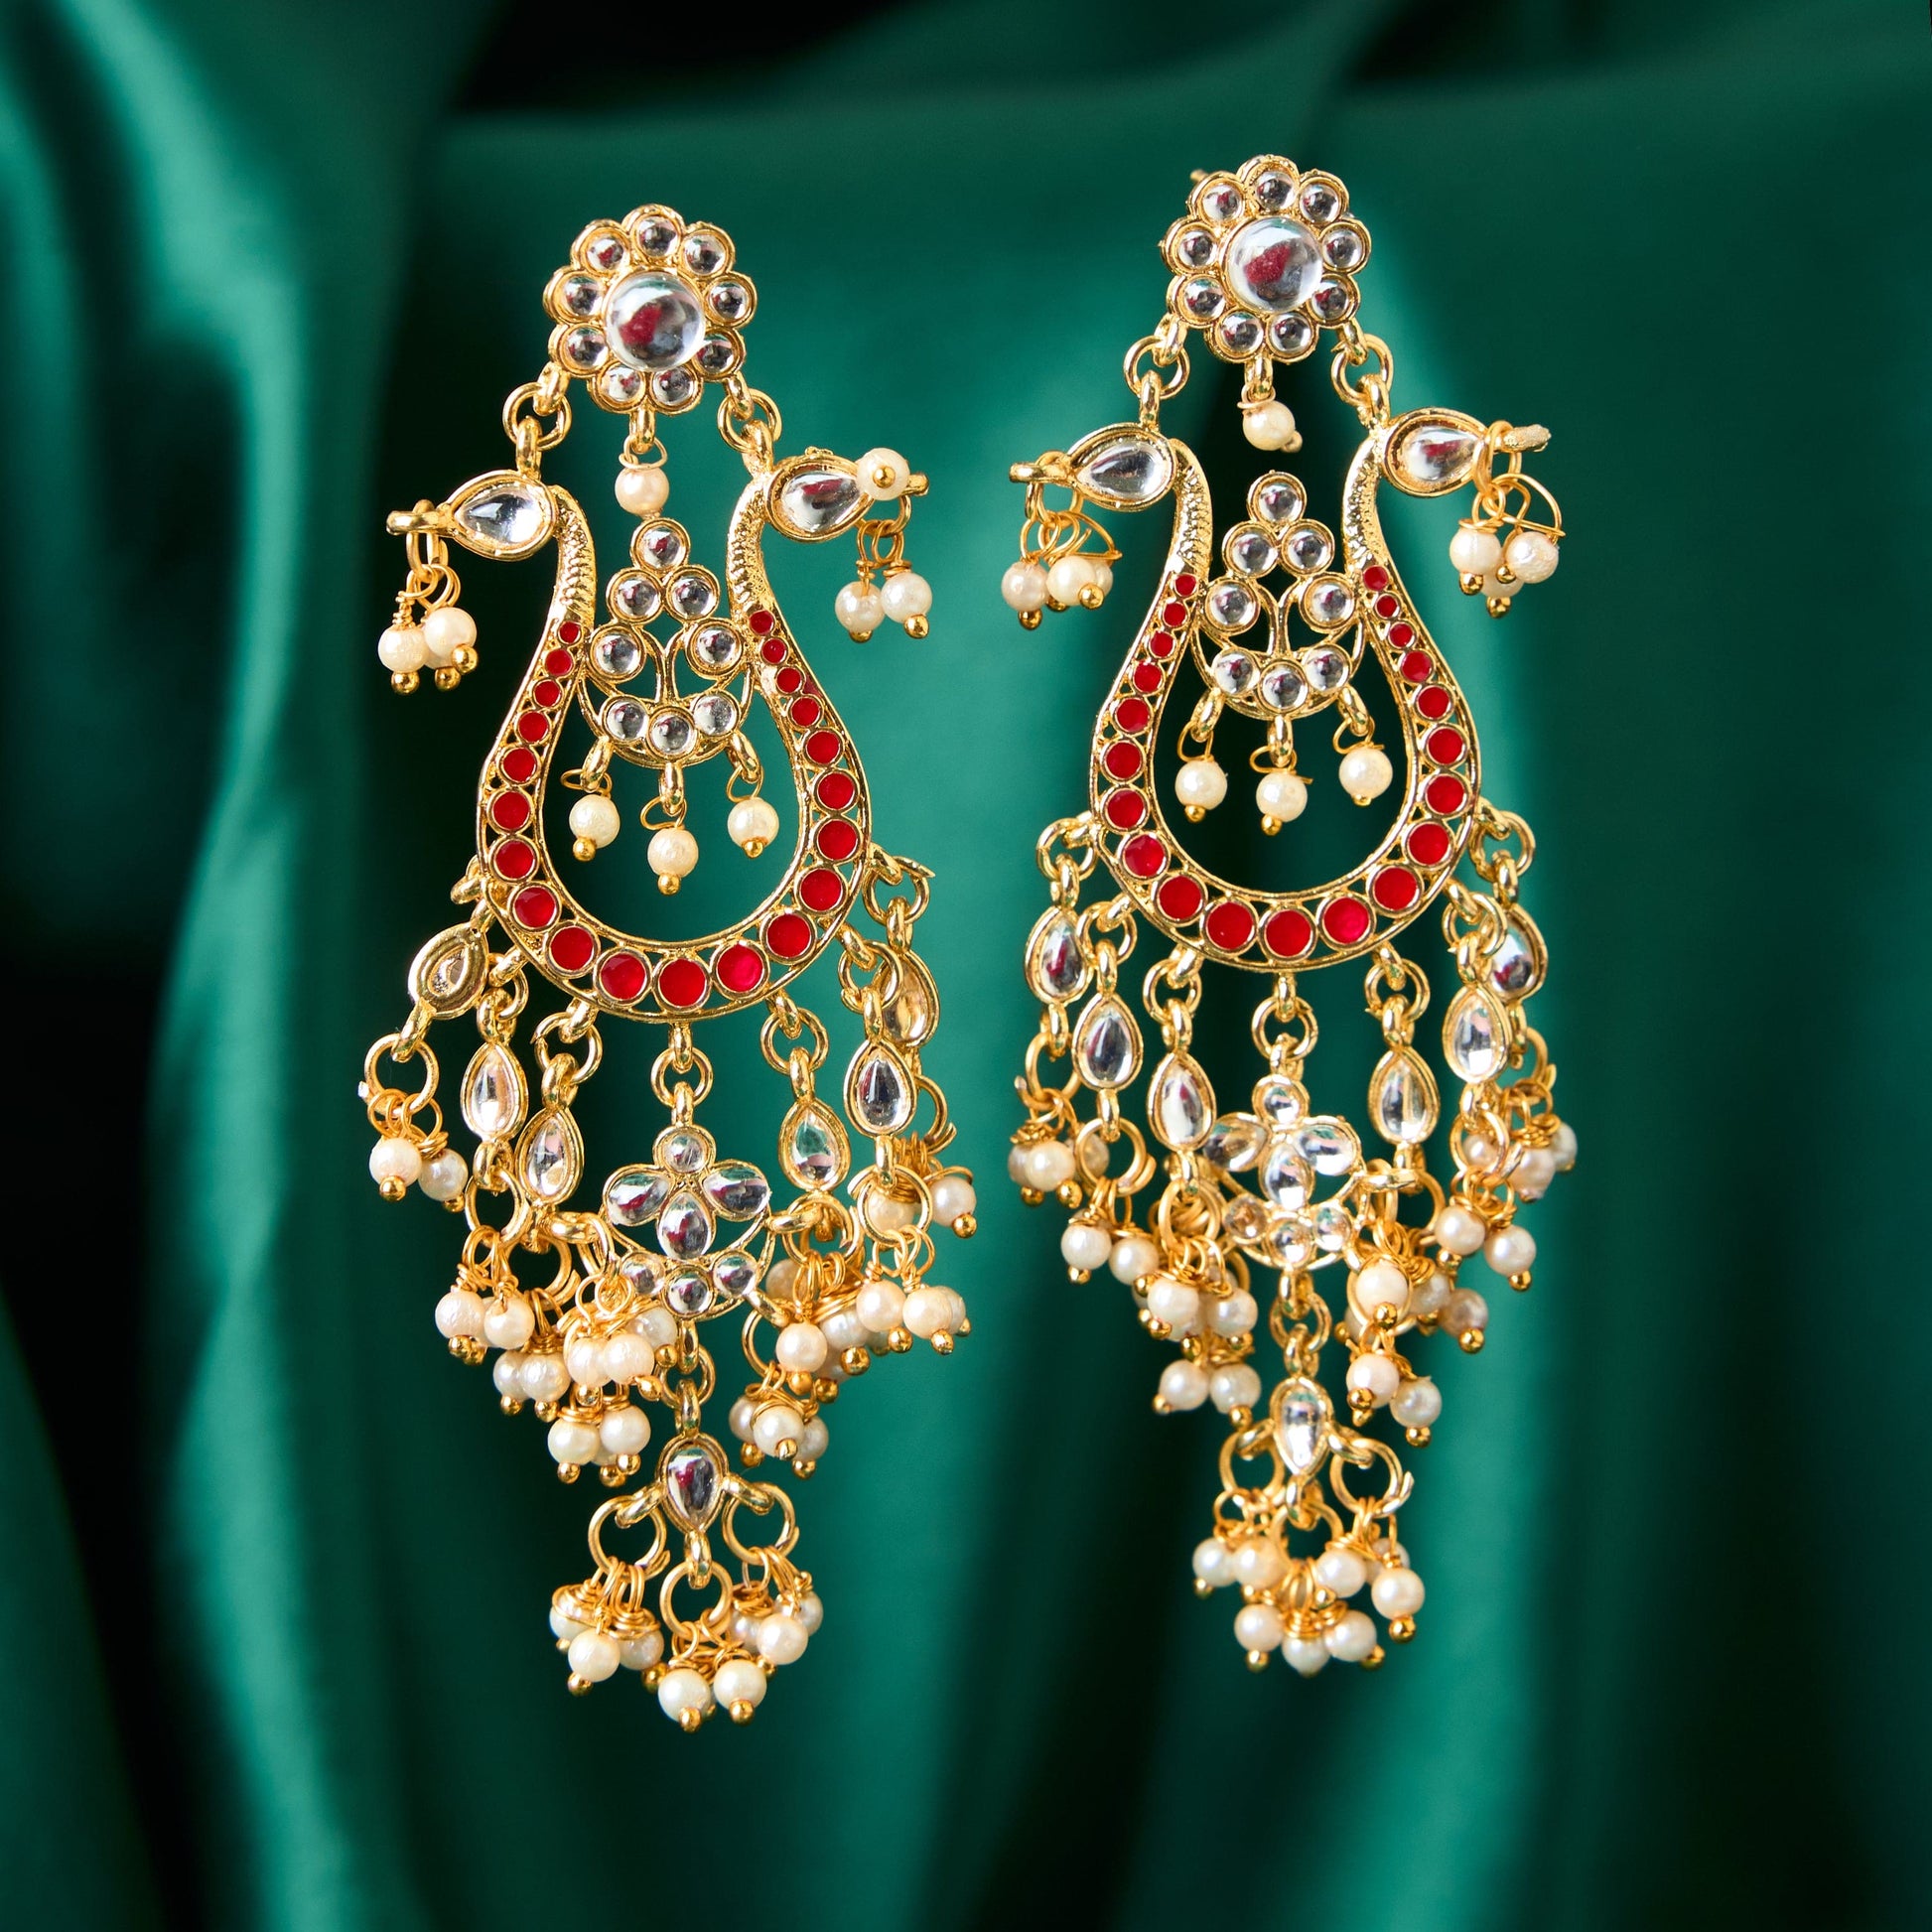 Moonstruck Golden/Gold Chandbali/Bali Dangle Earrings with Kundan & Pearls - Elevate Your Ethnic Indian Glamour look for Women & Girls - www.MoonstruckINC.com